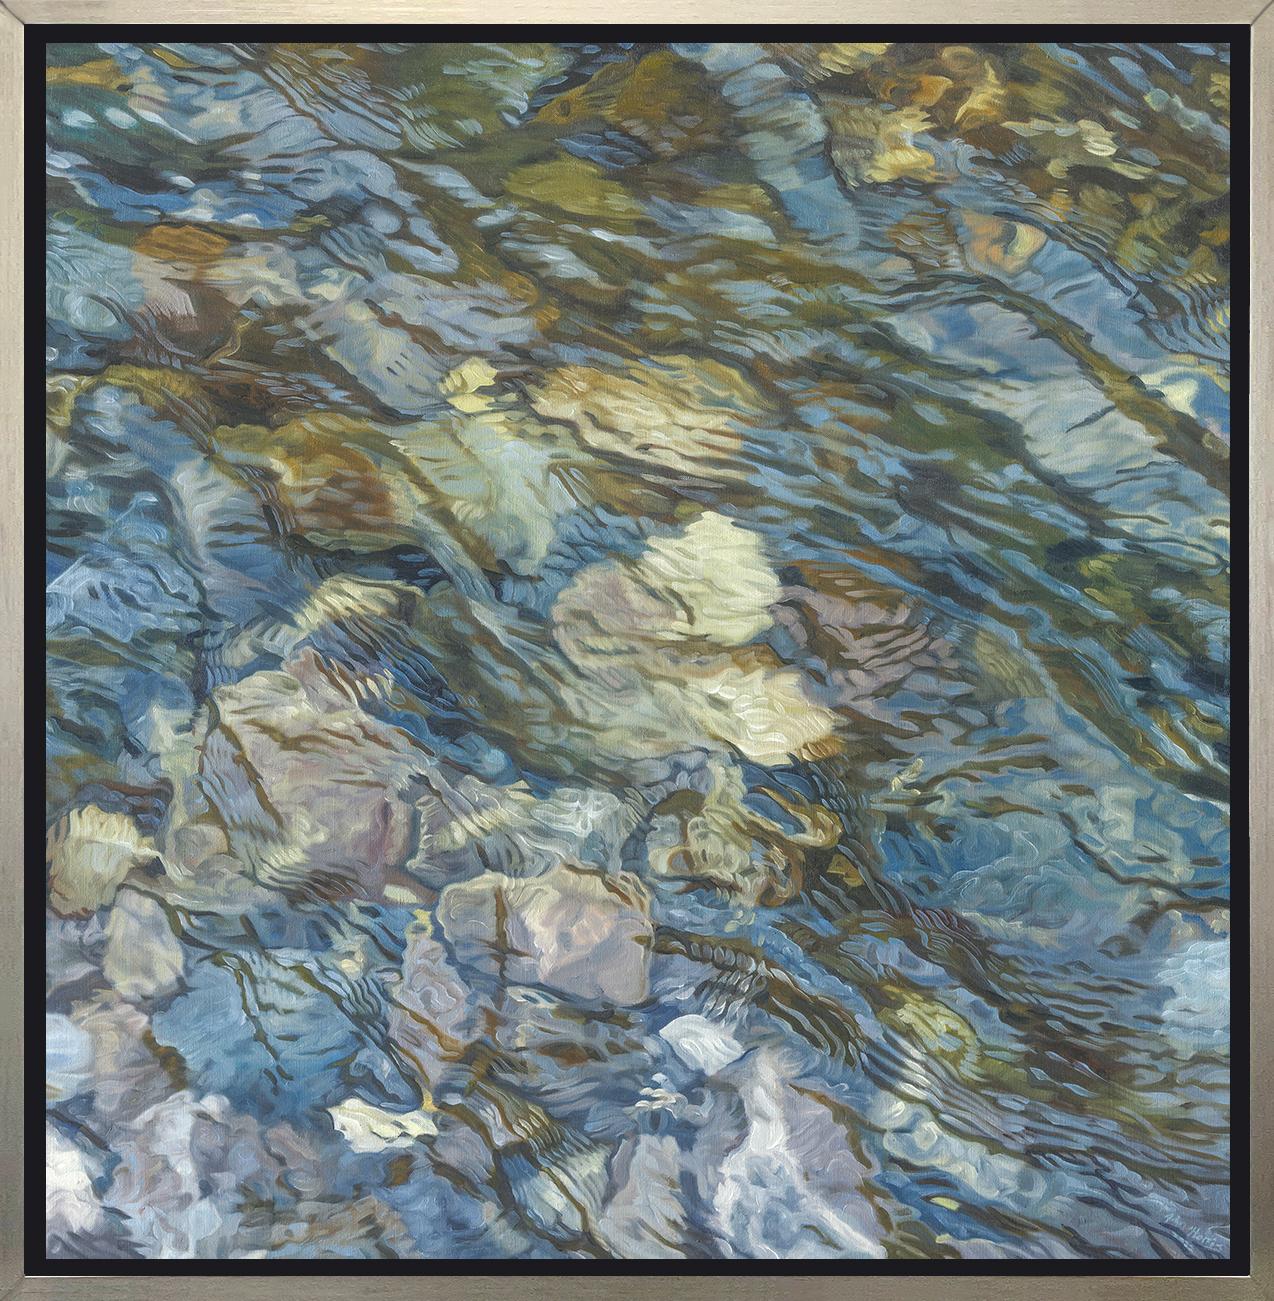 John Harris (painter) Landscape Print - "Riverbed 4, " Framed Limited Edition Giclee Print, 30" x 30"